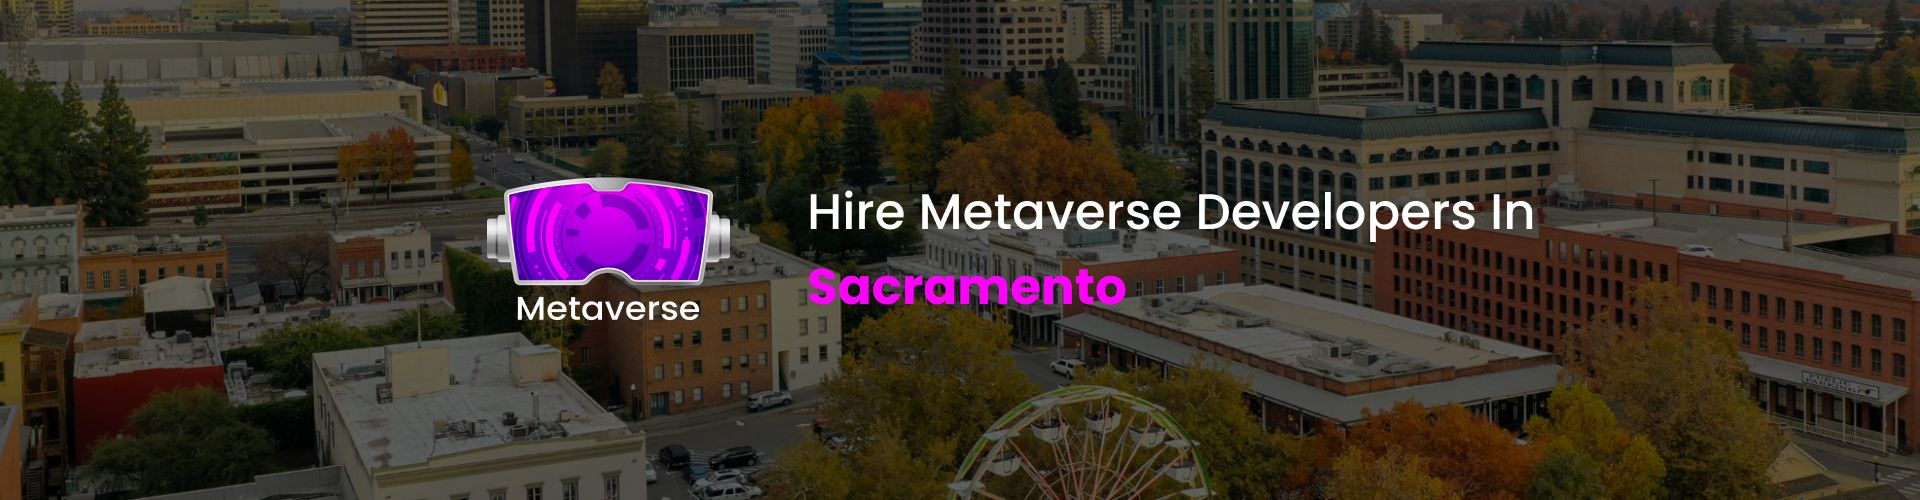 hire metaverse developers in sacramento